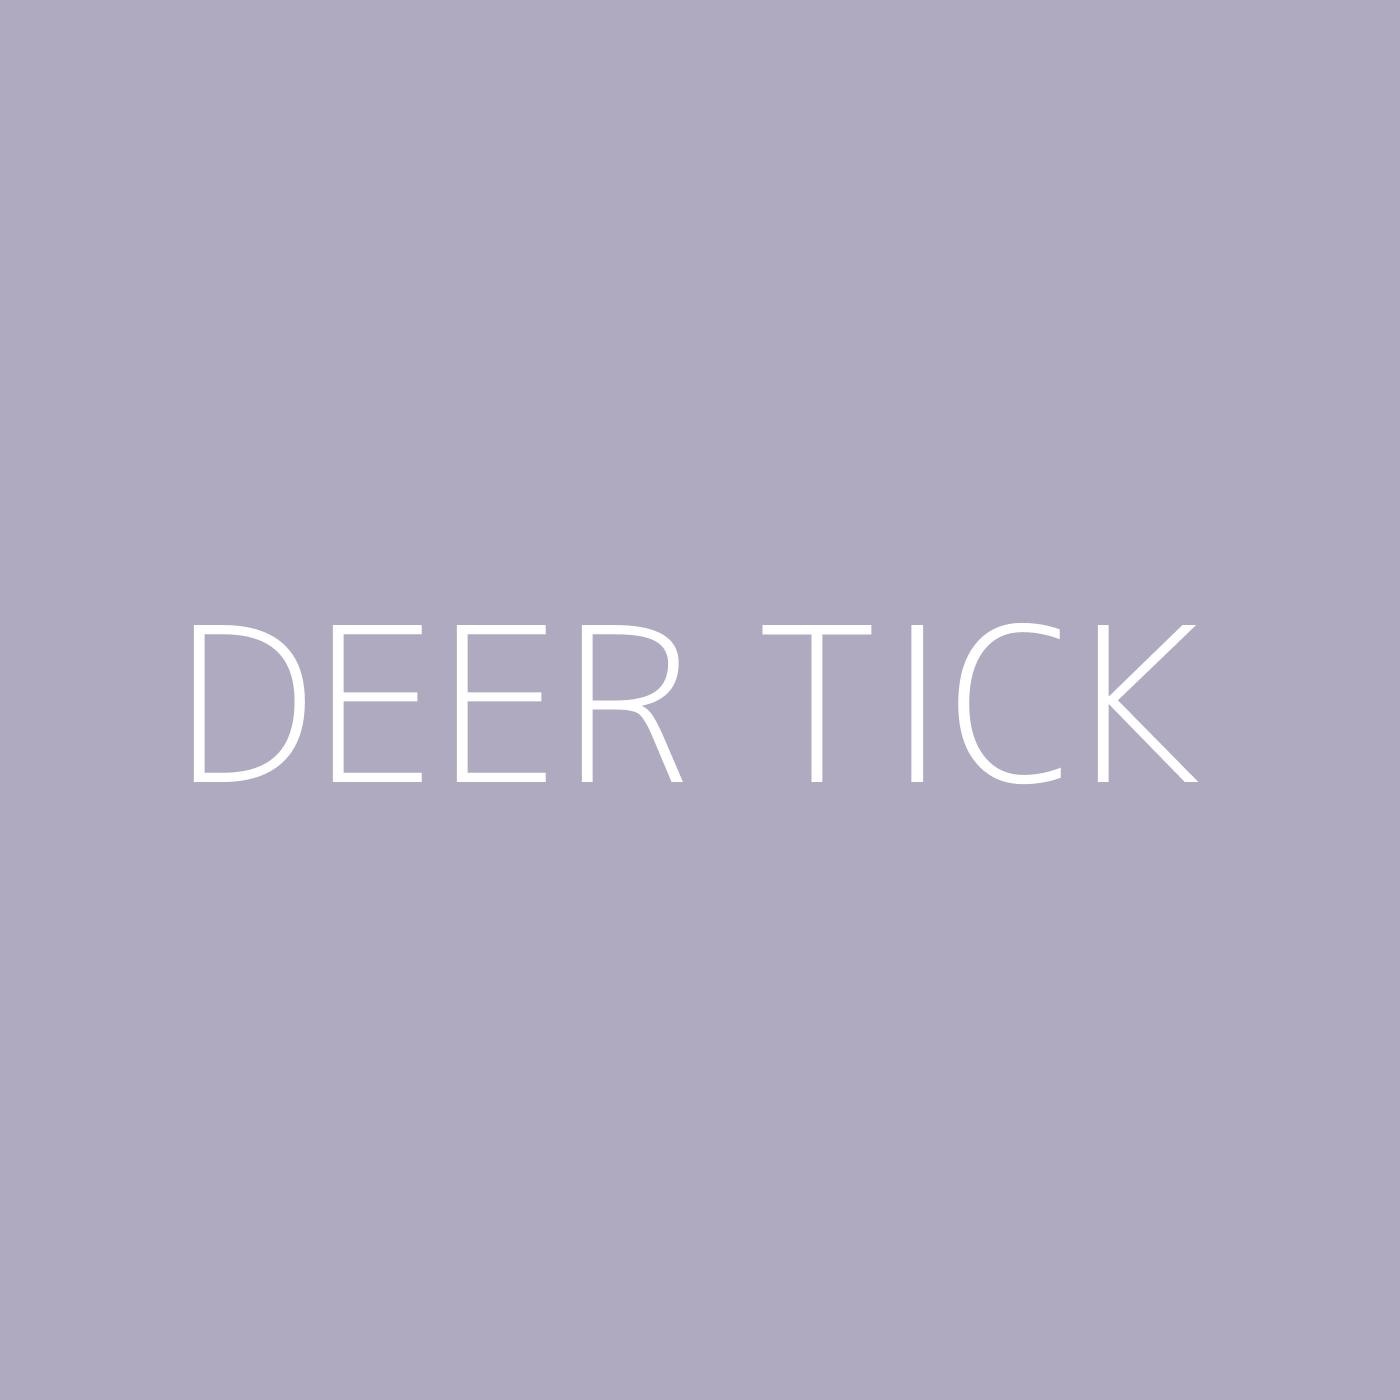 Deer Tick Playlist Artwork